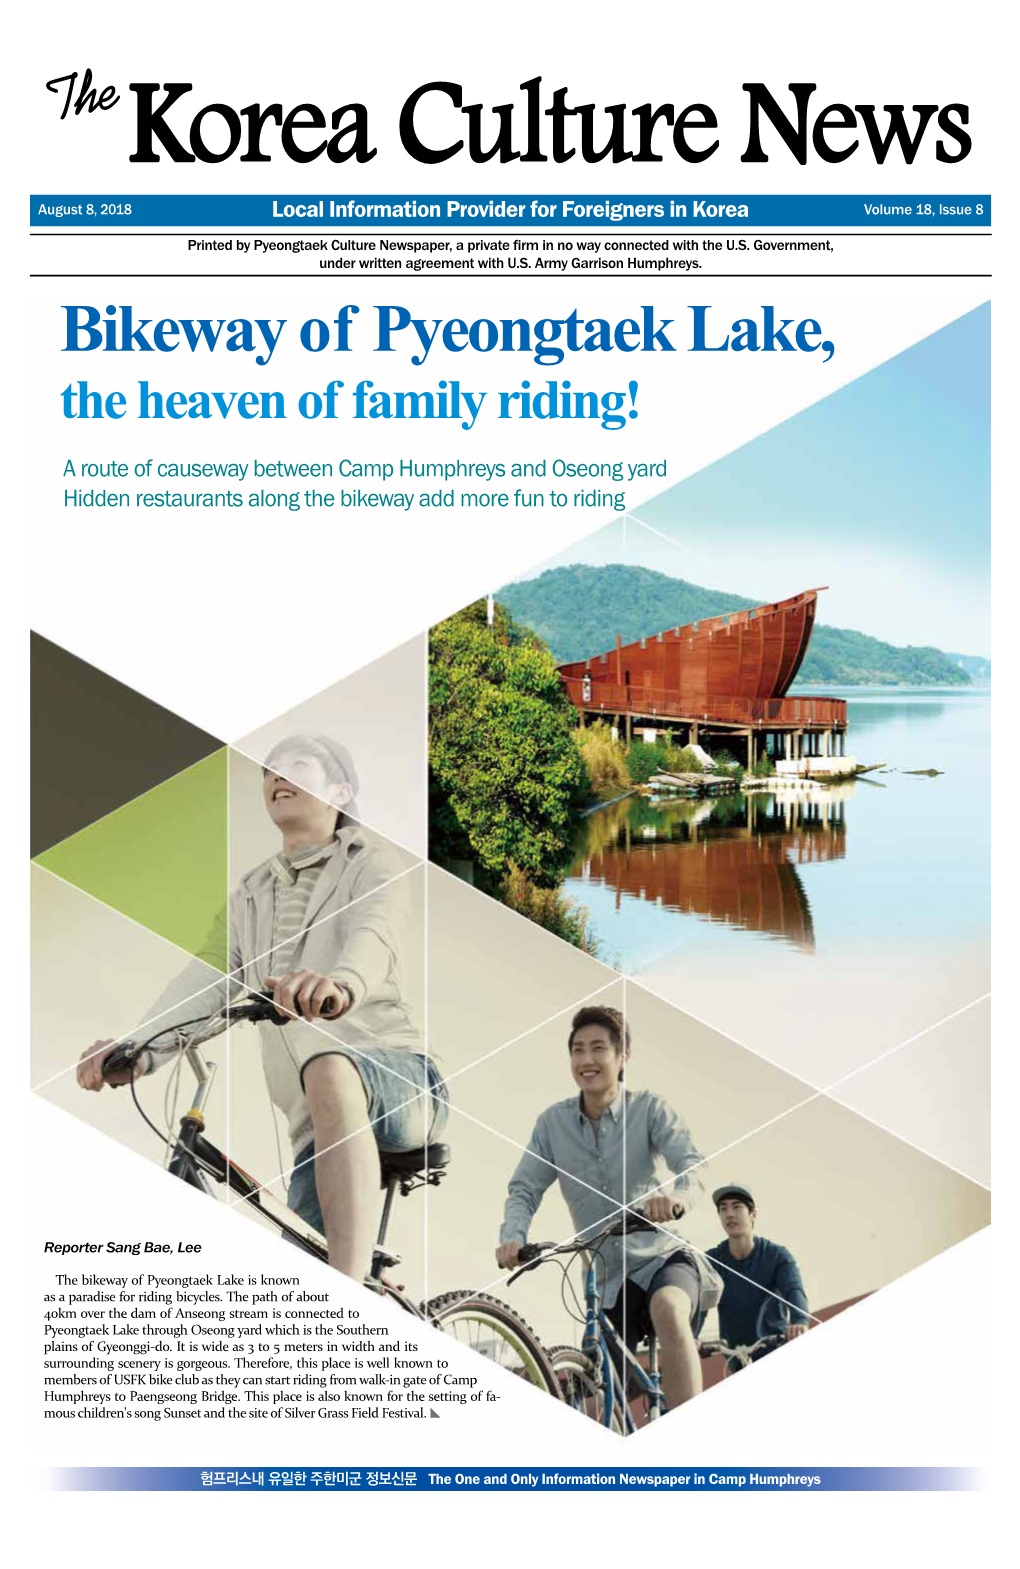 Bikeway of Pyeongtaek Lake